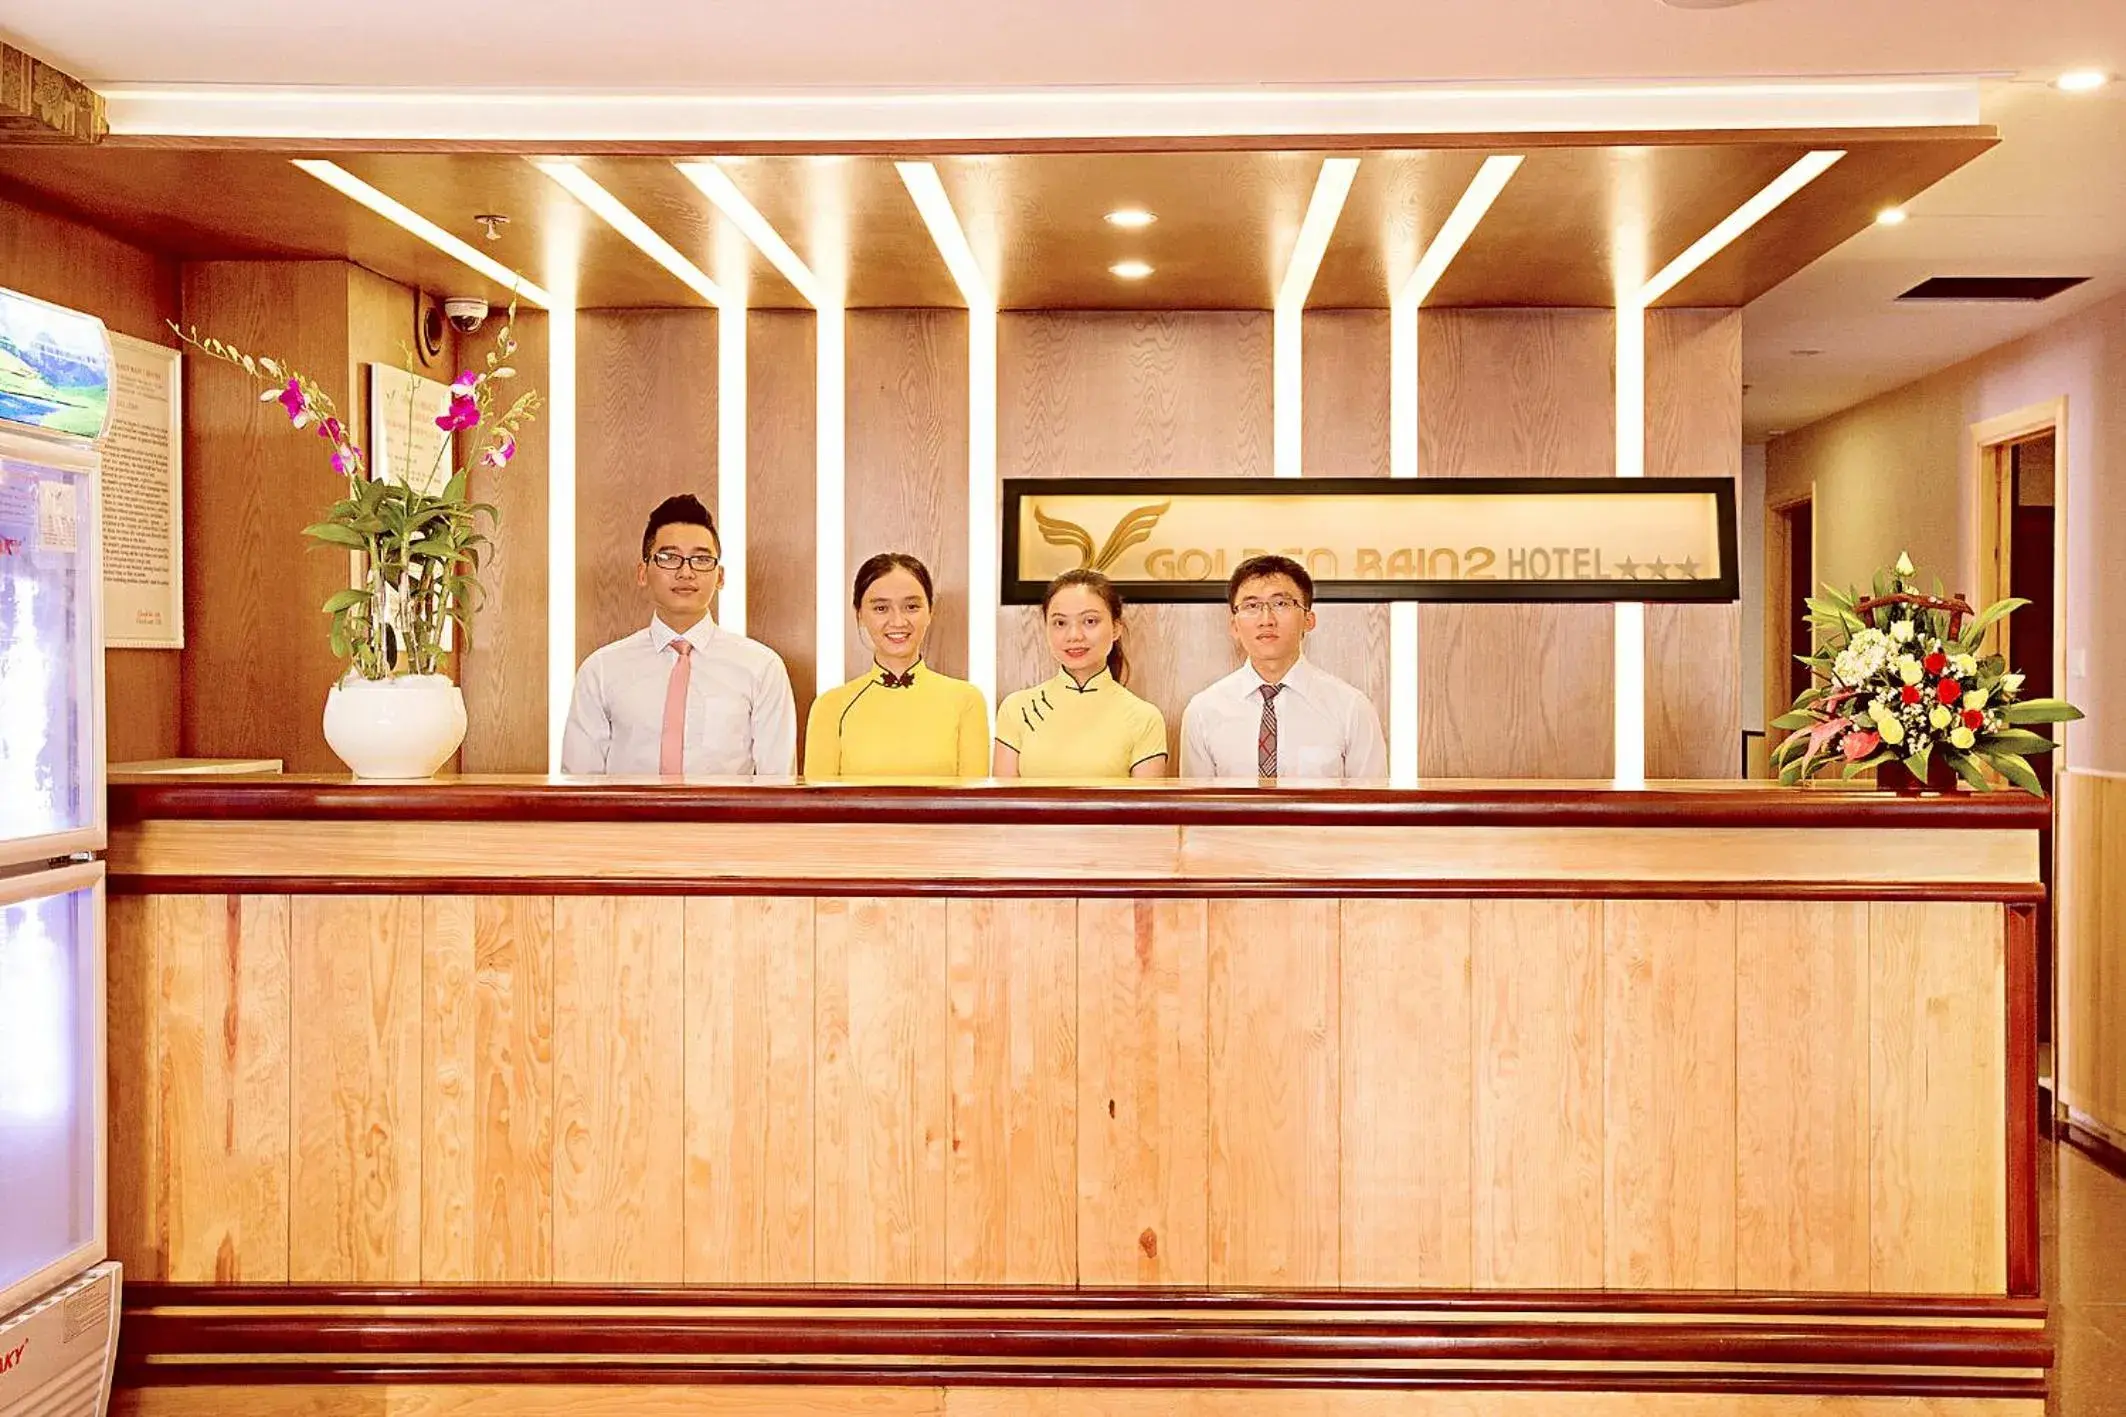 Staff, Lobby/Reception in Golden Rain 2 Hotel